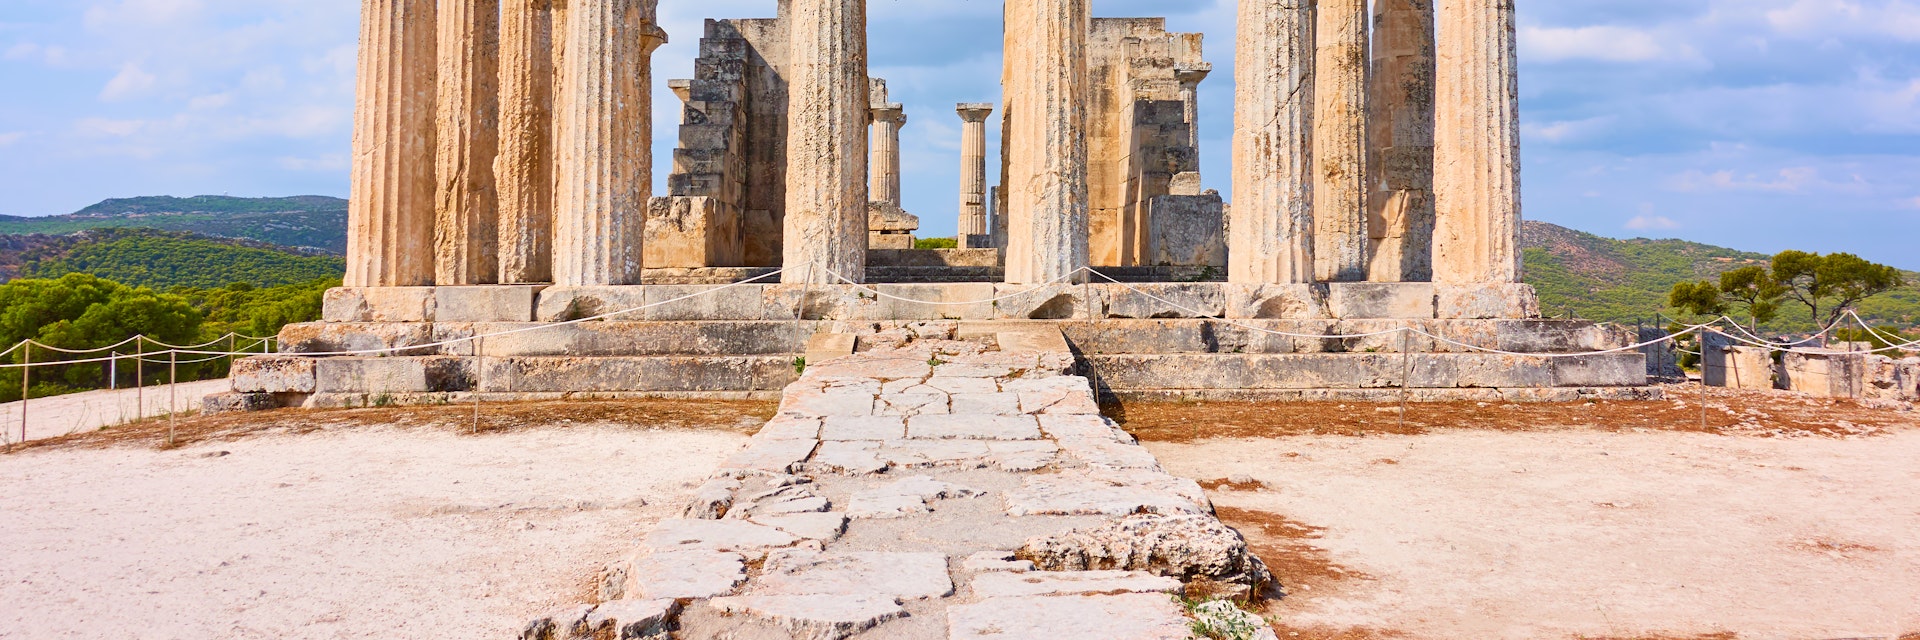 Temple of Aphaea in Aegina Island,  Greece. Ancient greek architecture
1958314057